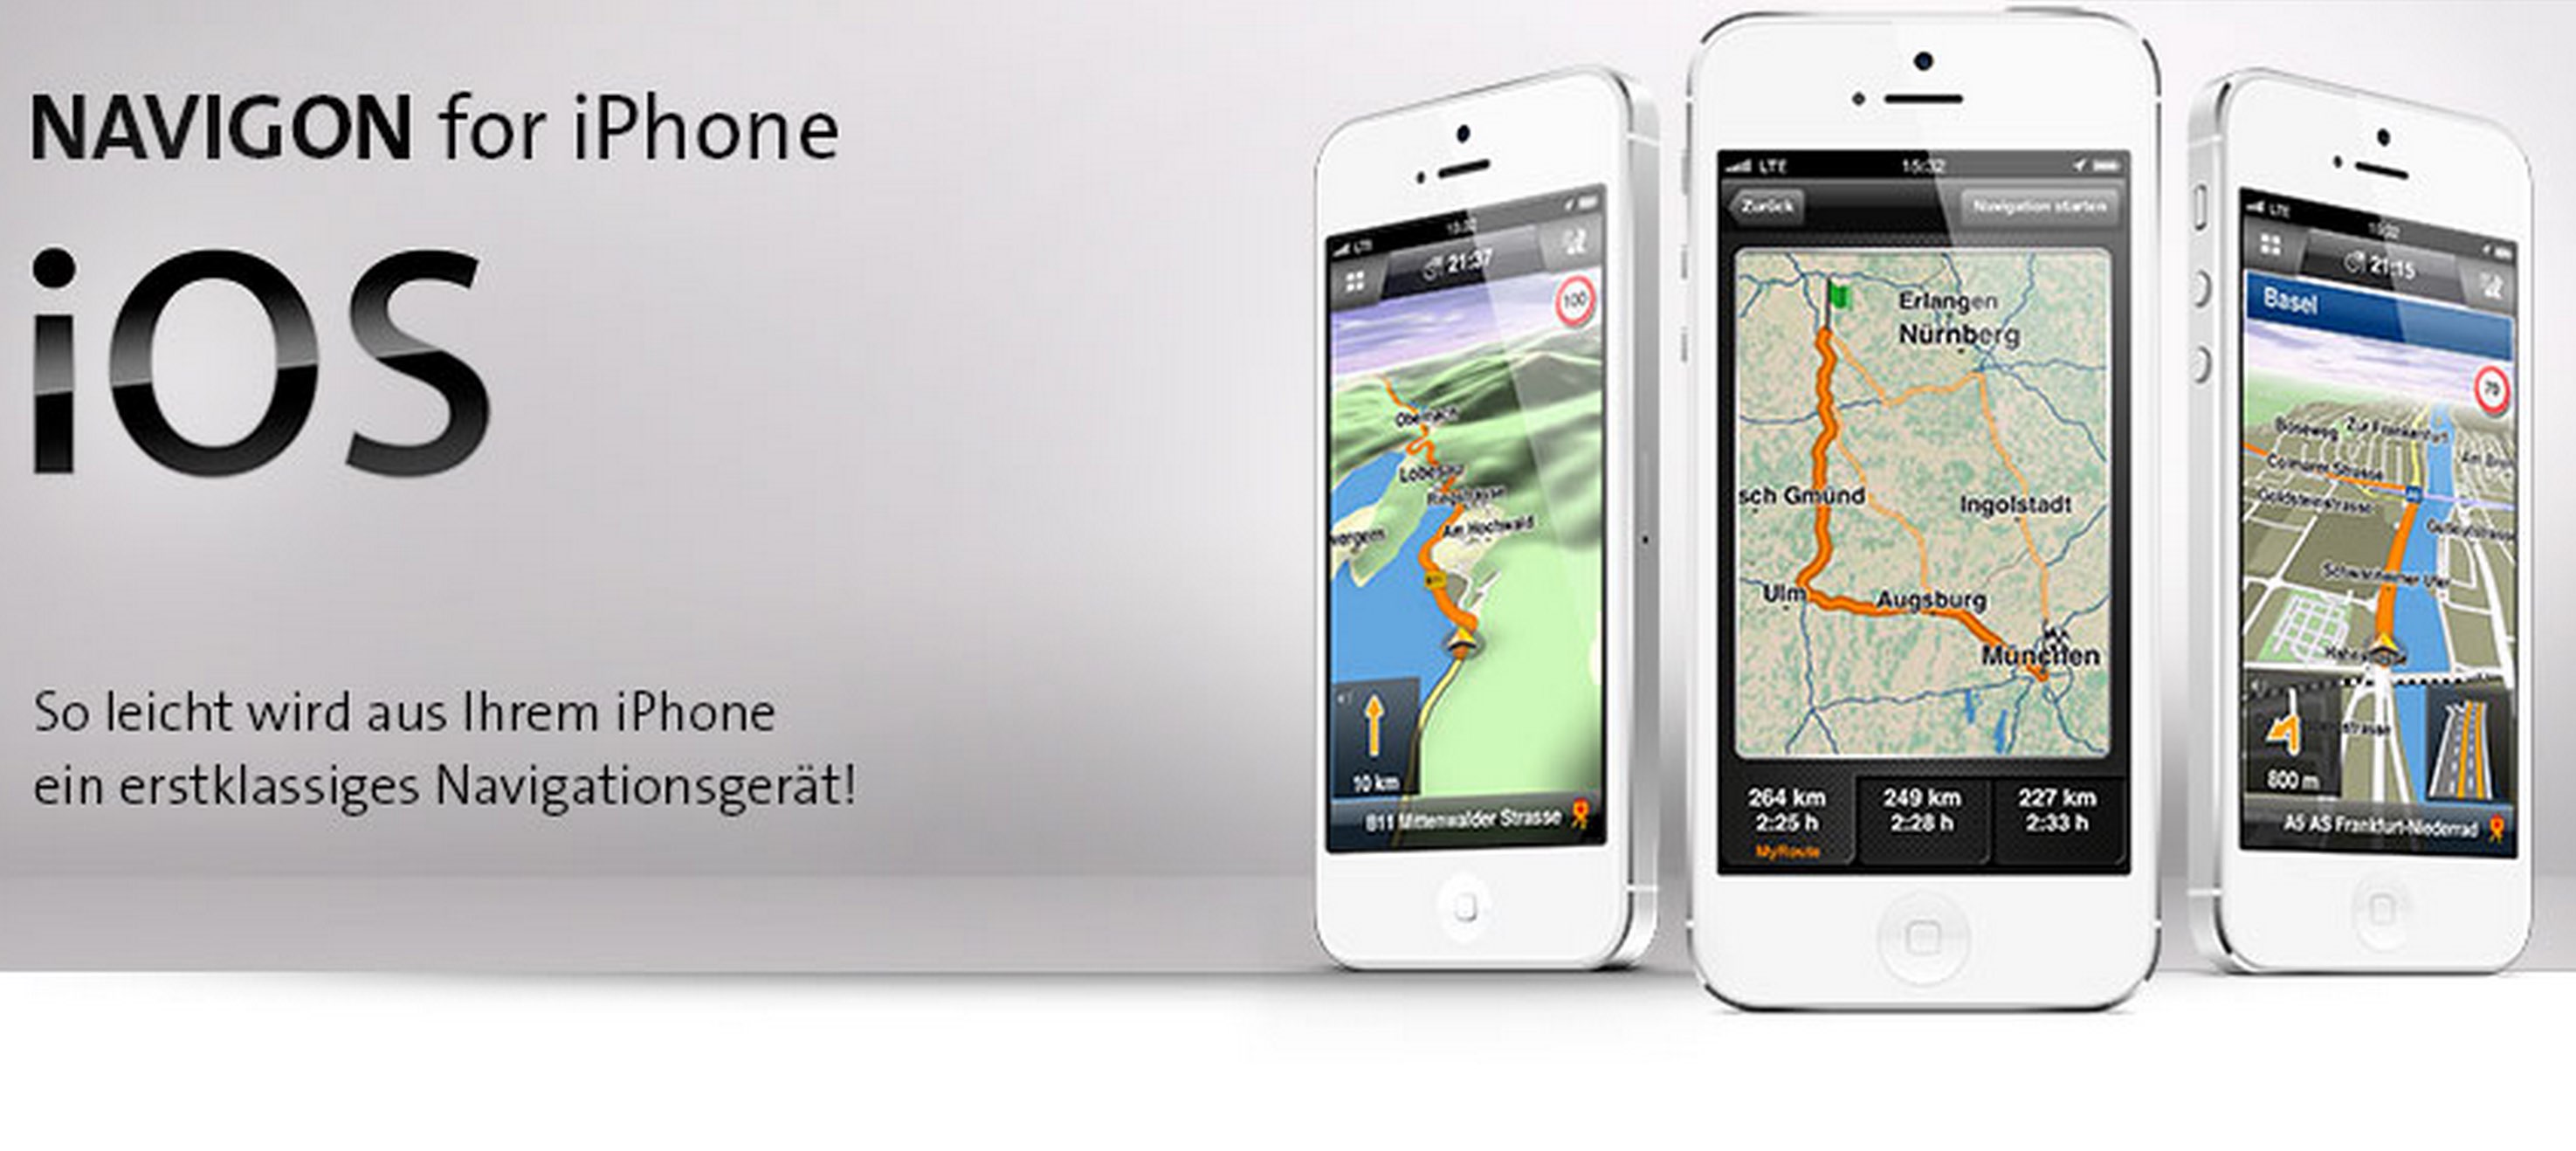 Navigon für iPhone 6 & iPhone 6 Plus angepasst 2